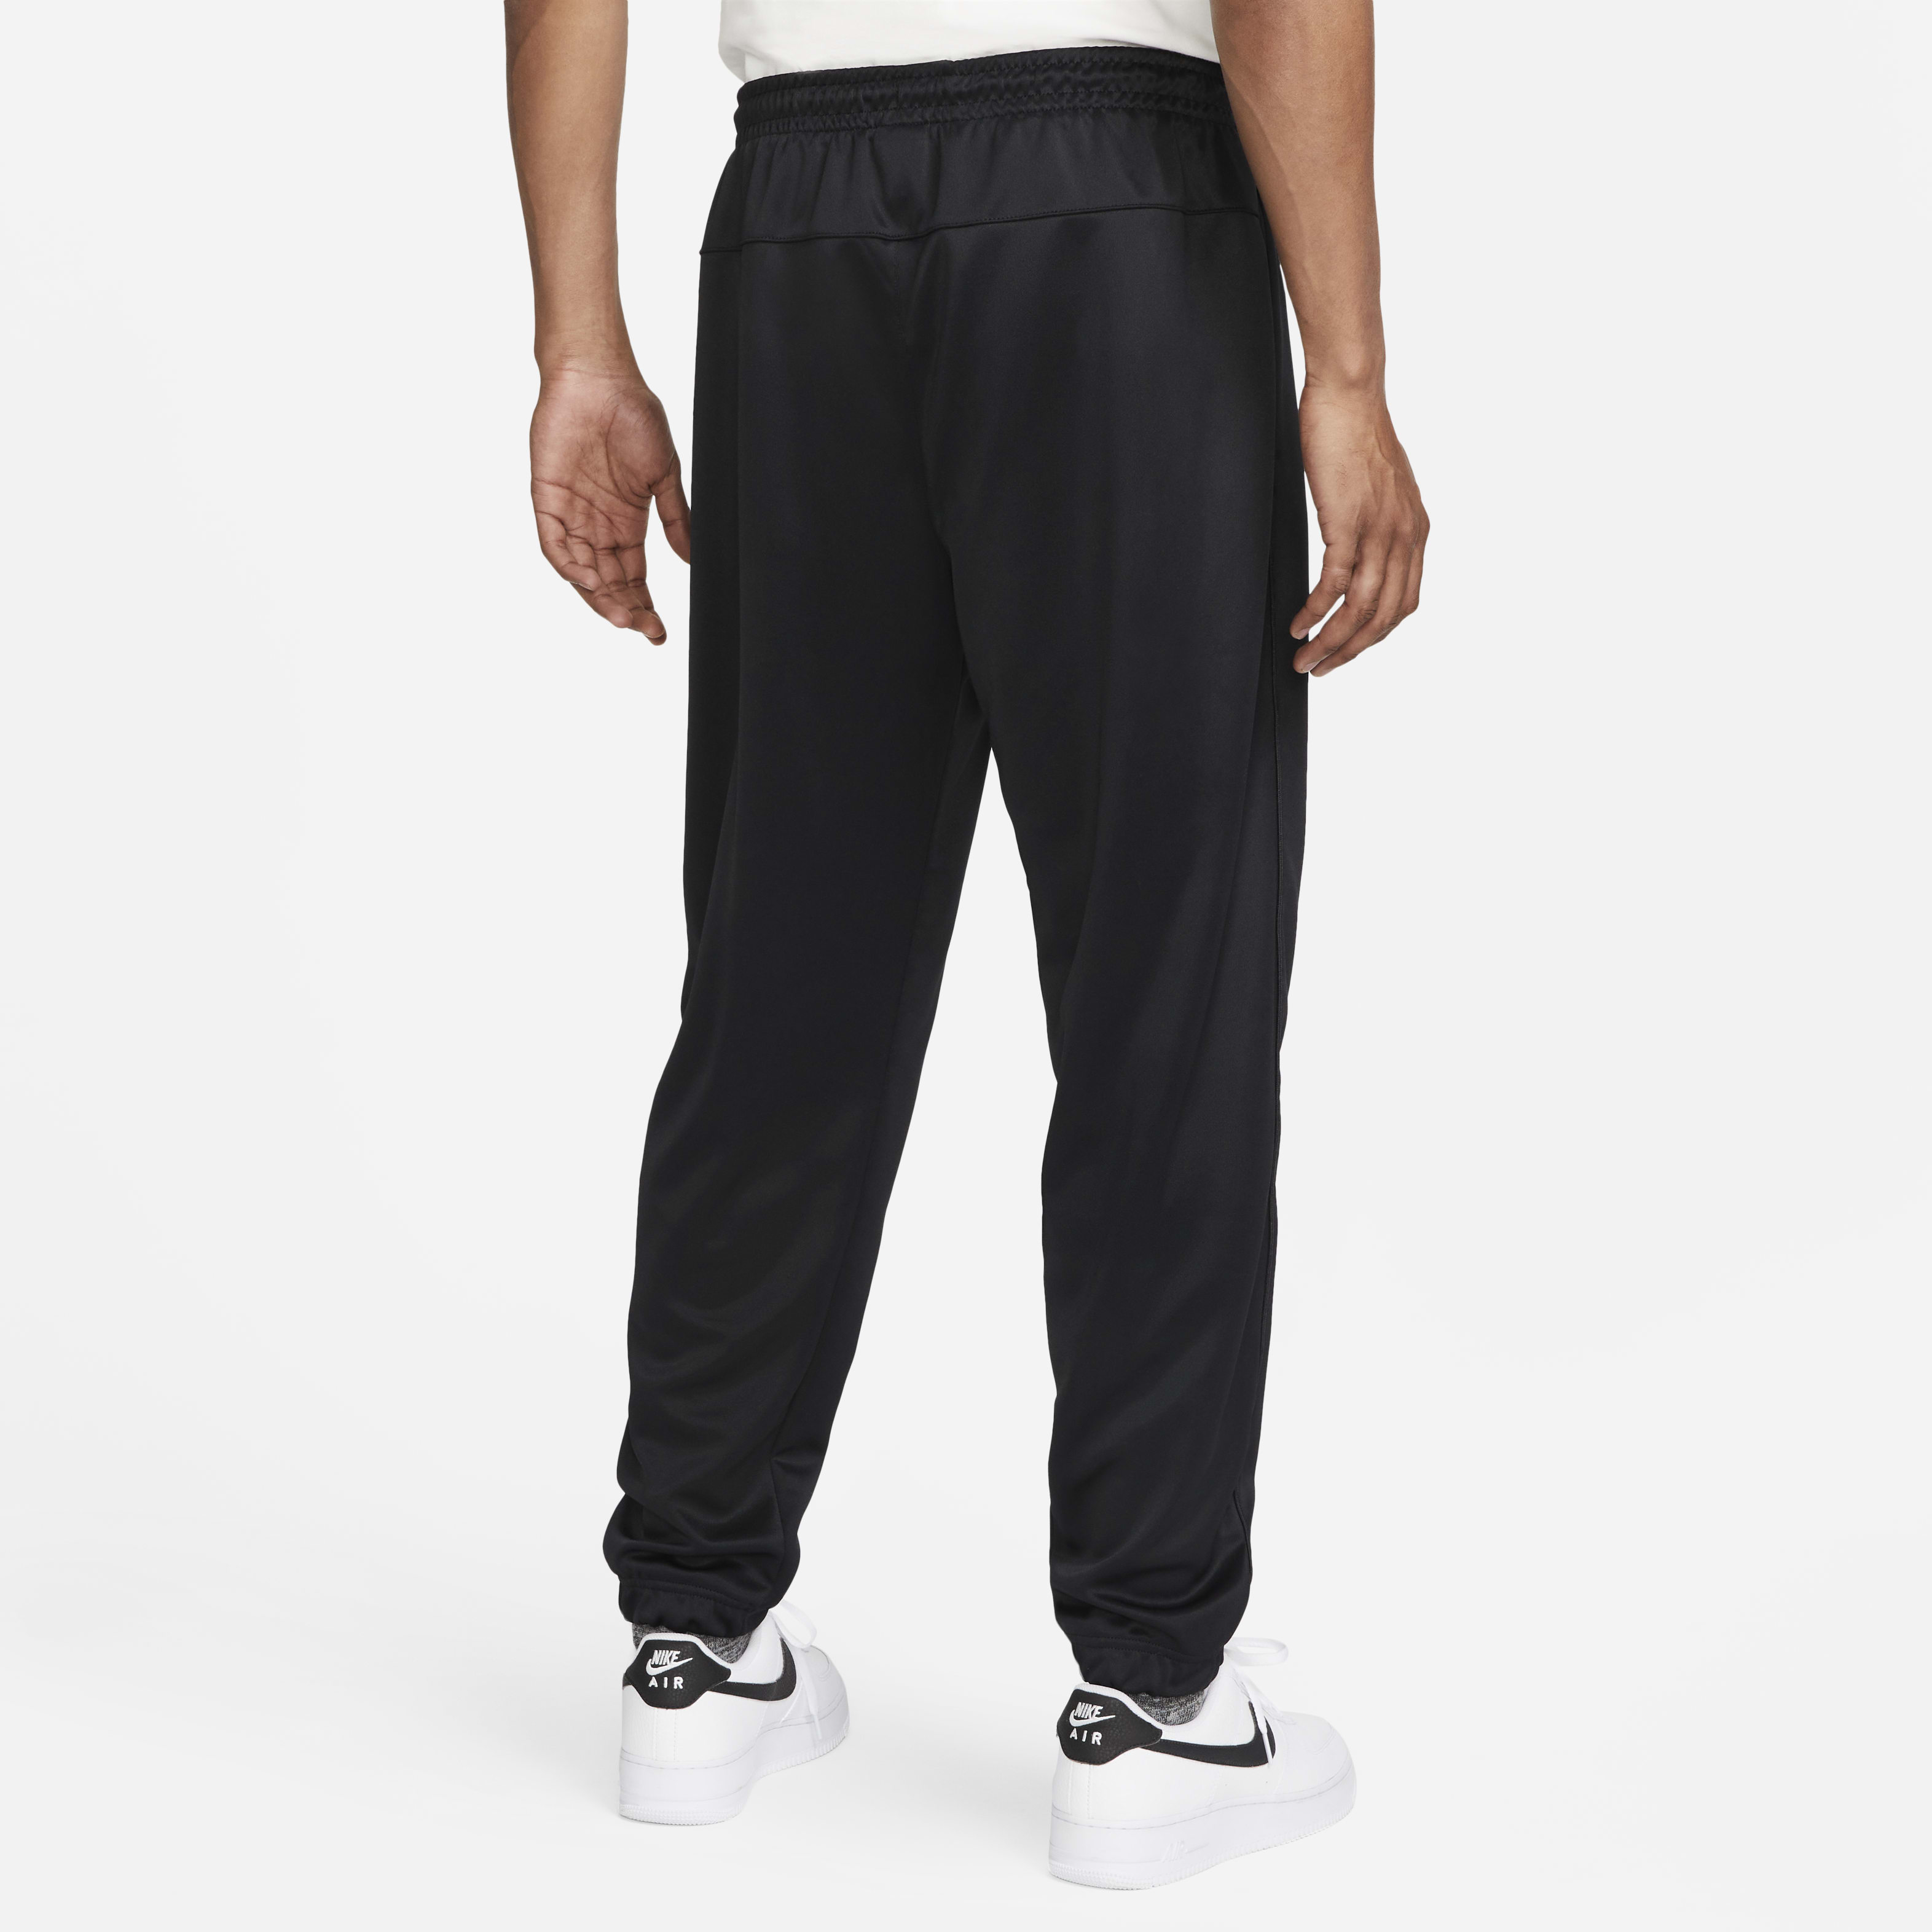 Nike Sportswear Air, Negro, hi-res